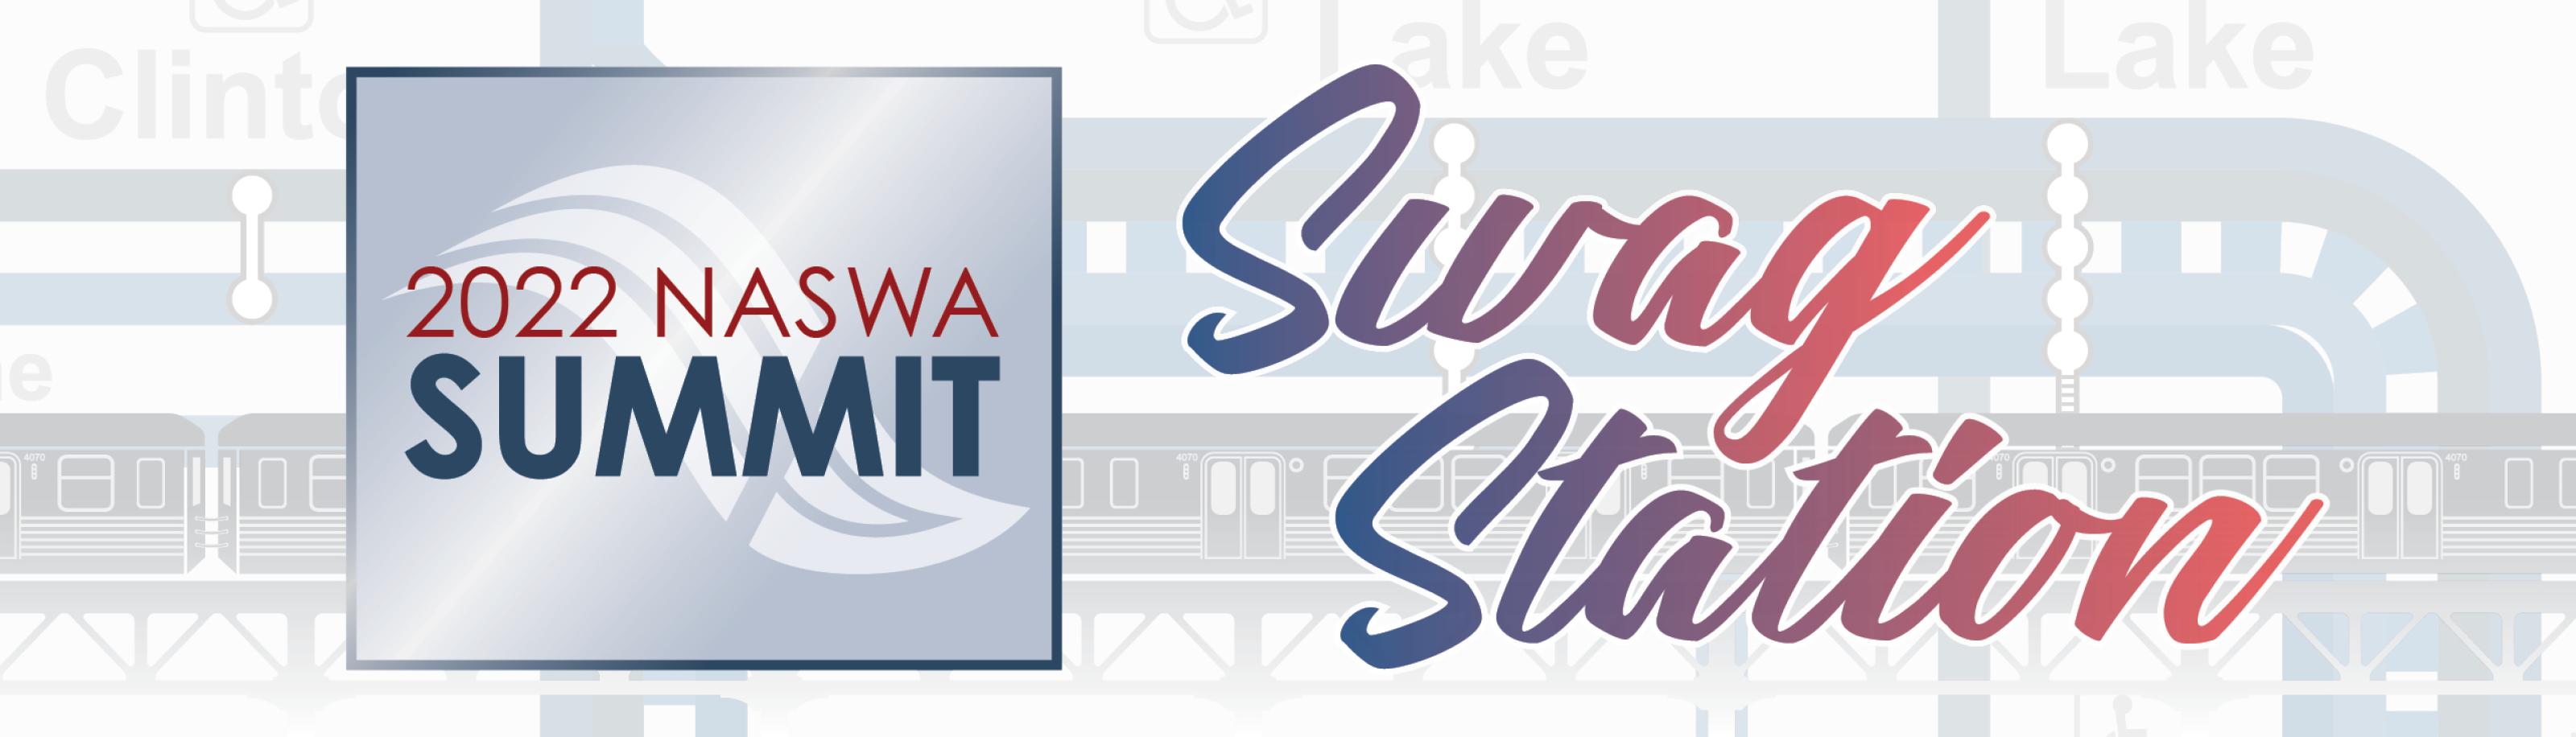 2022 NASWA Summit Swag Station